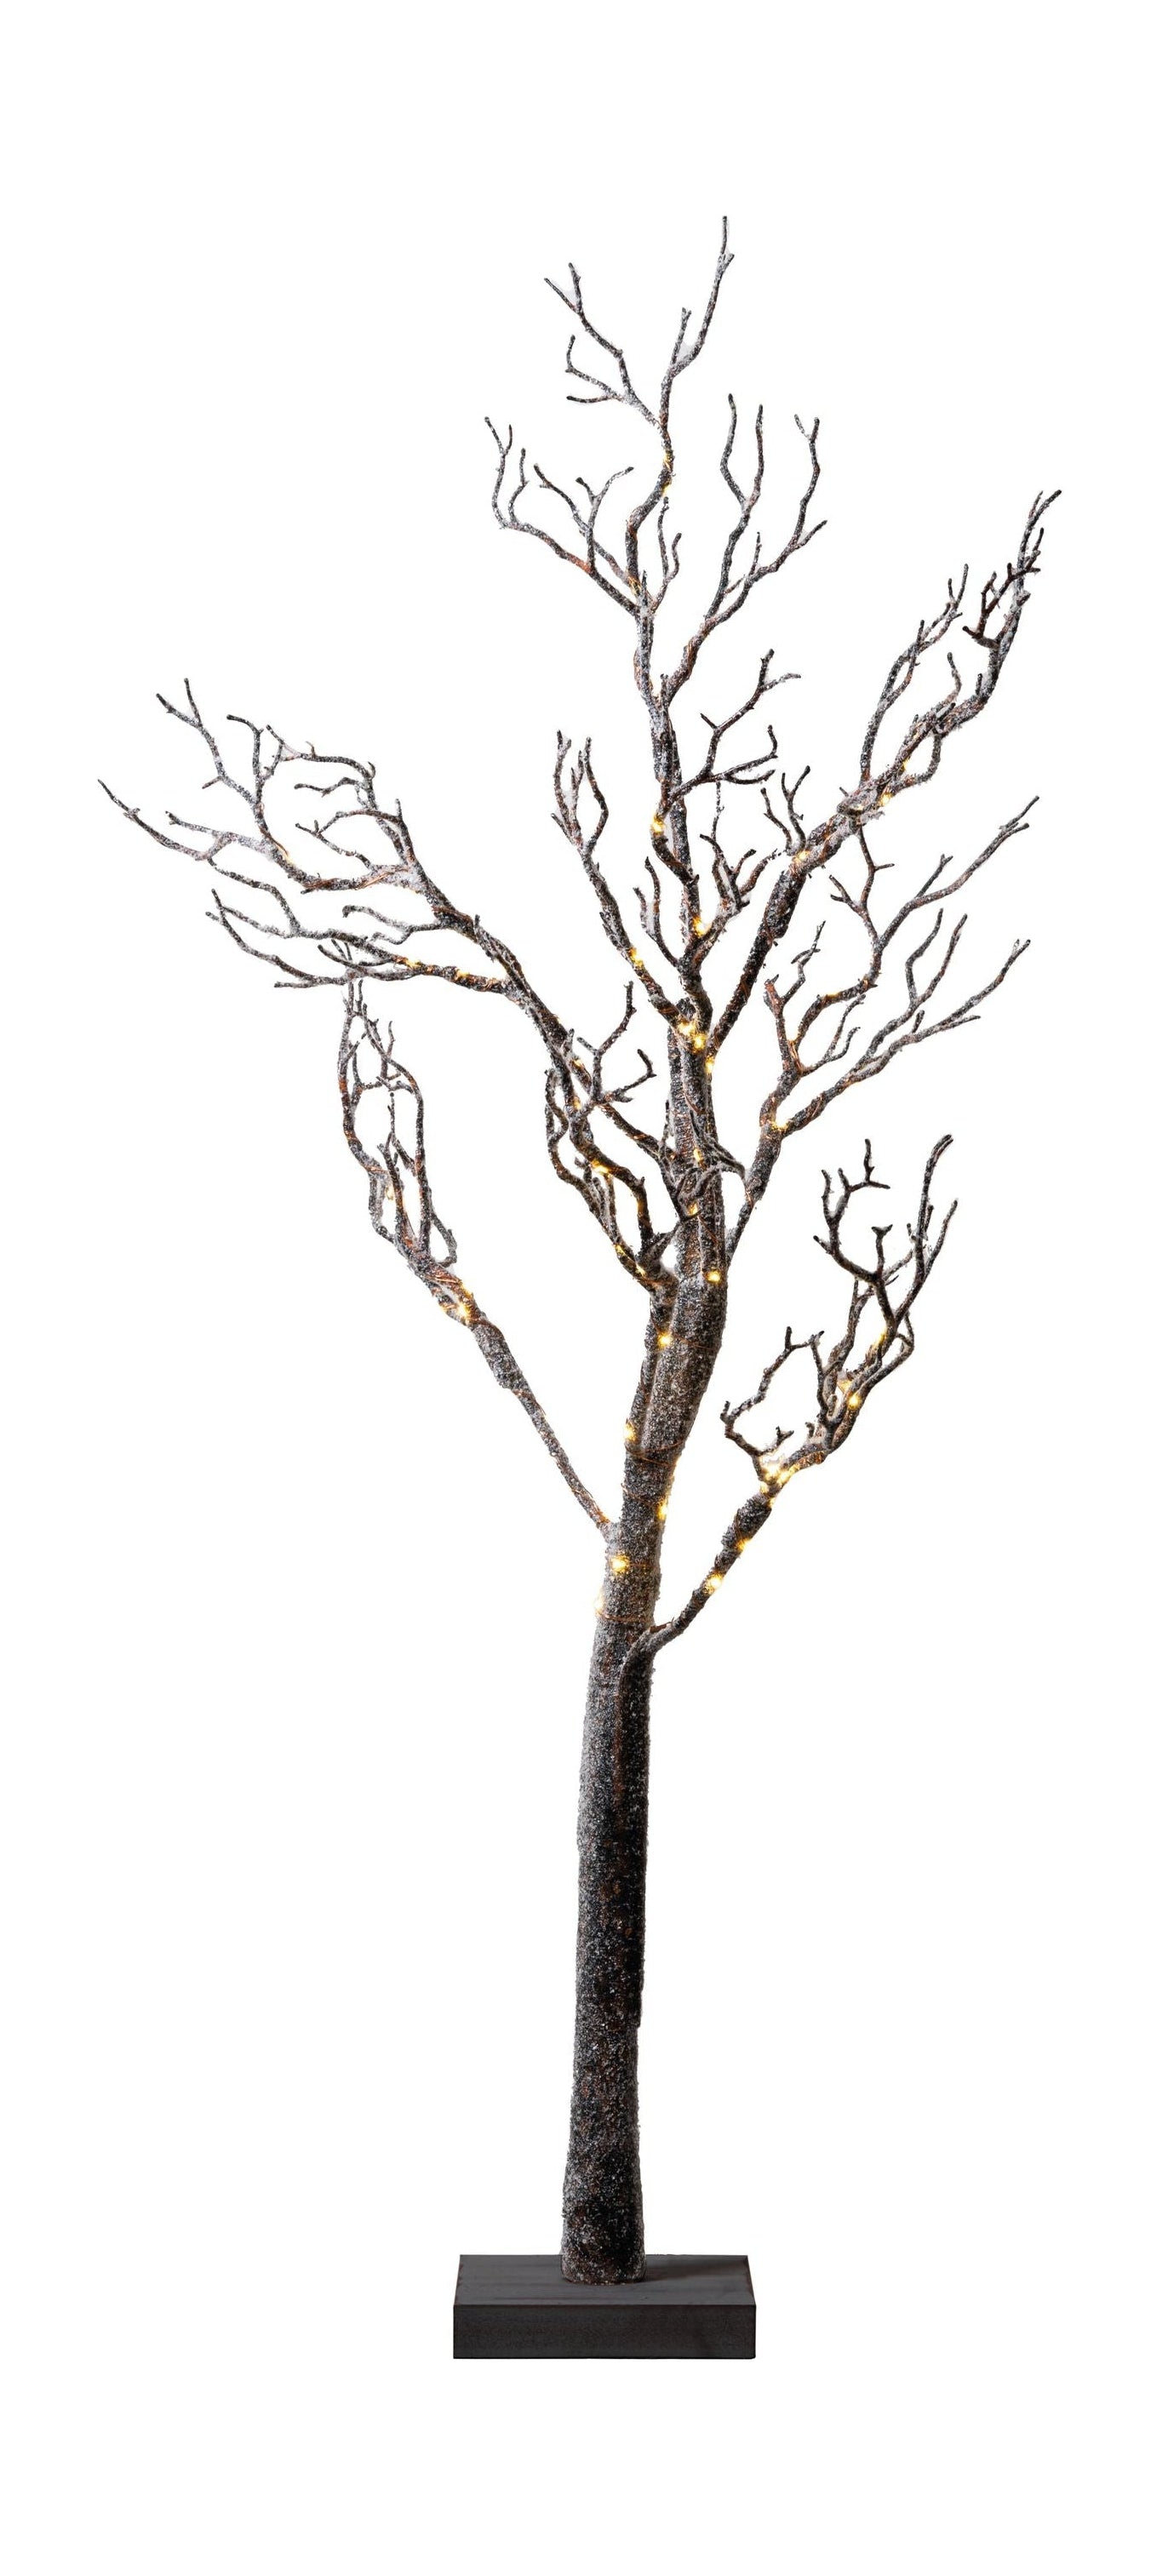 Sirius Tora puu 1,2 m, ruskea/luminen